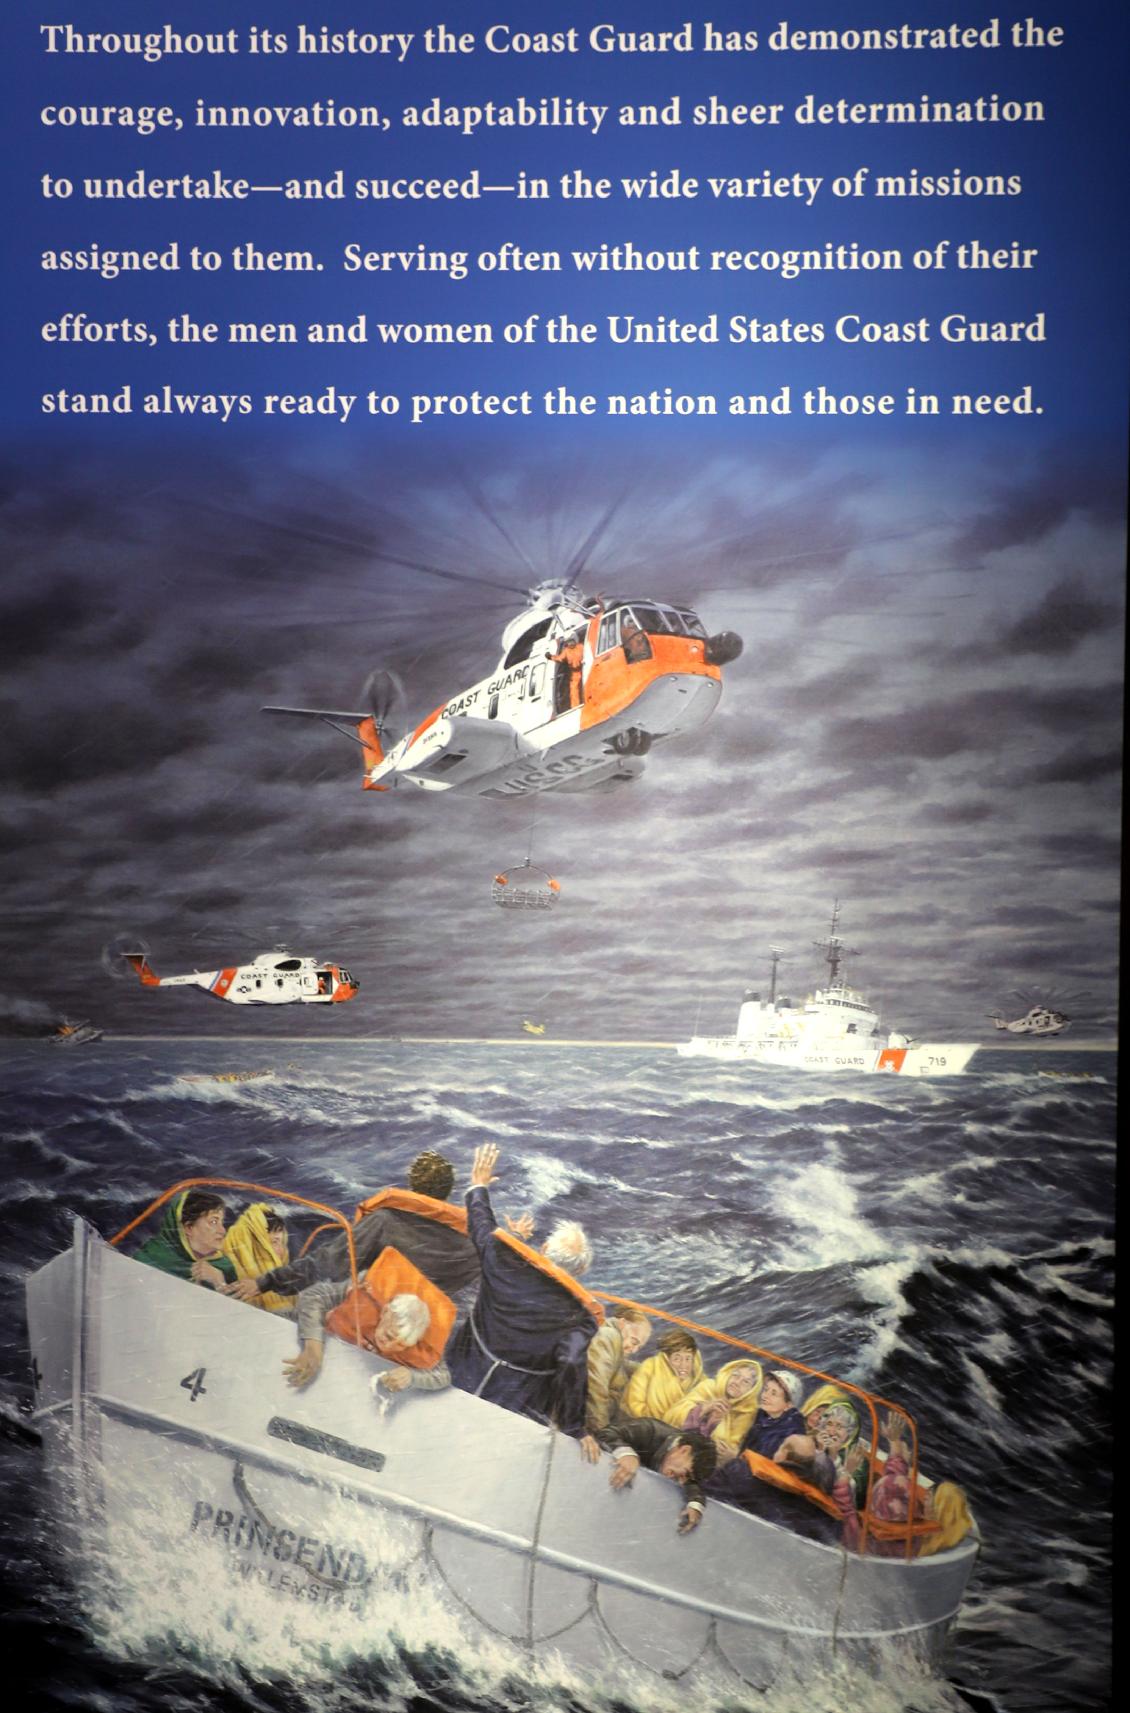 U.S. Coast Guard Academy Museum - I am a Coast Guardsman